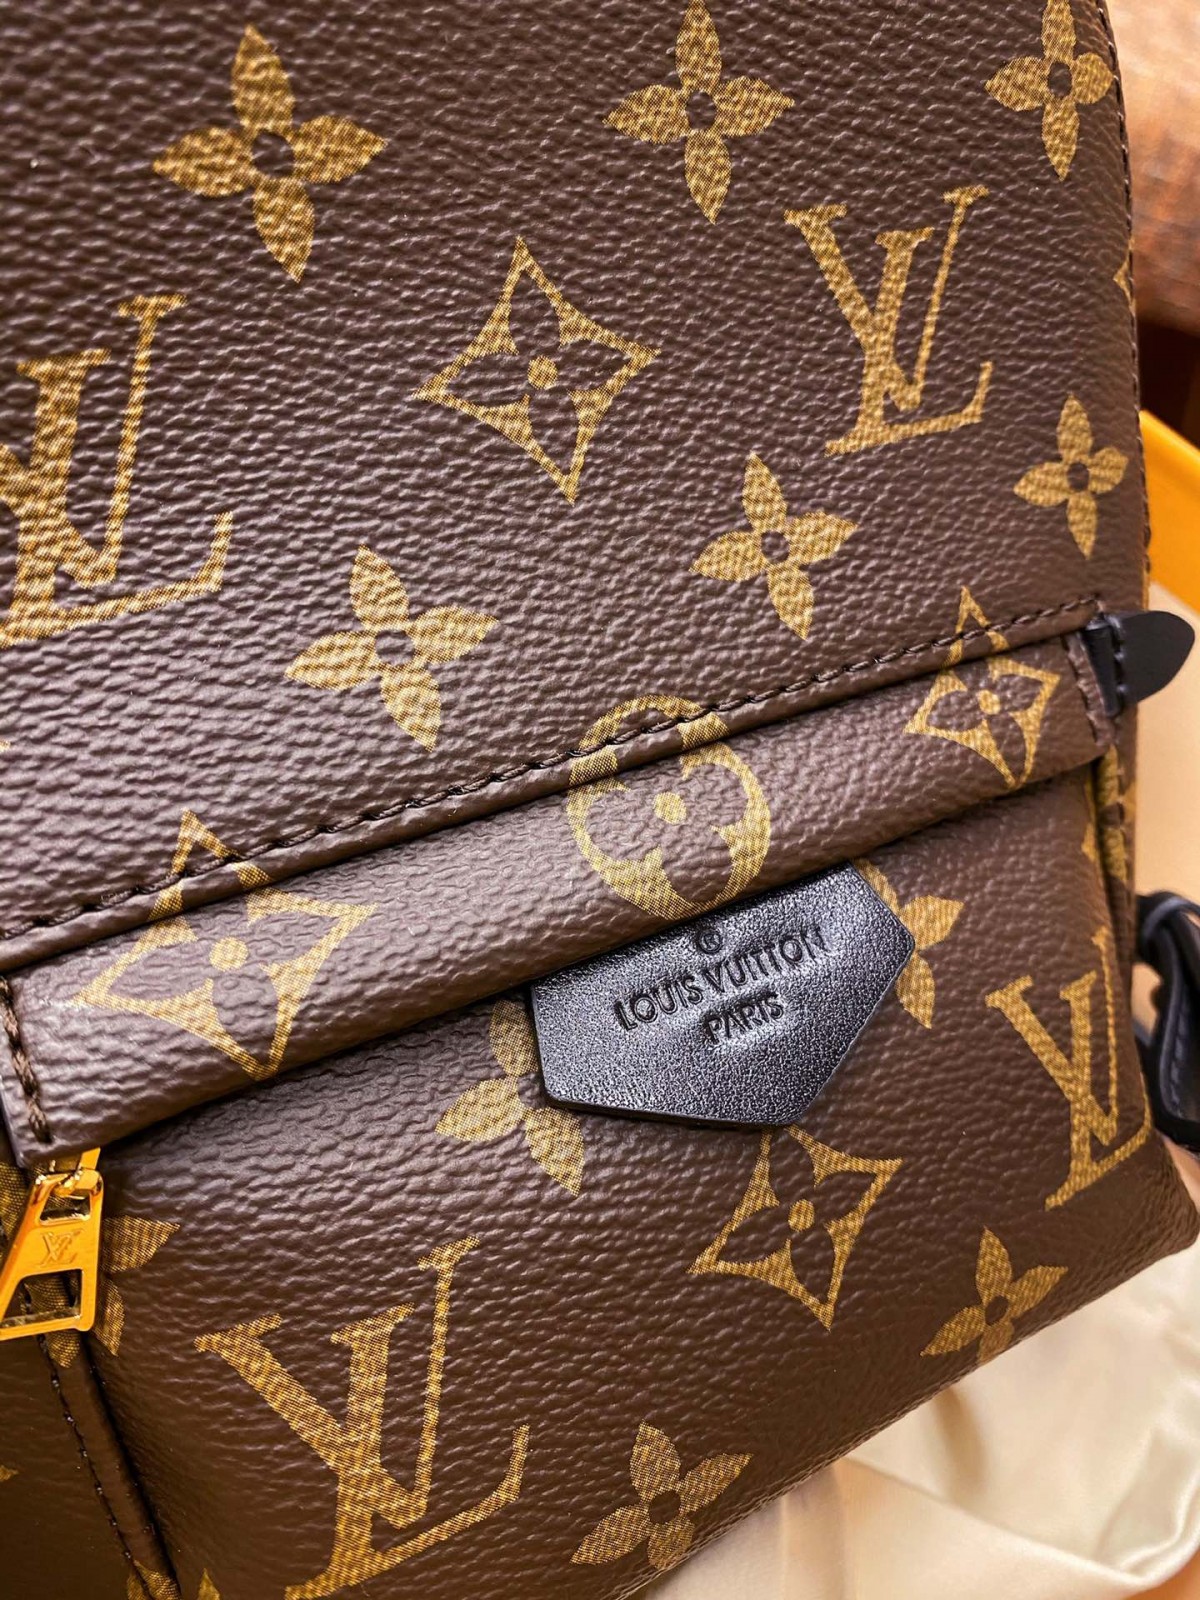 Louis Vuitton bags backpack replica reviews (2022 اپ ڈیٹ) - بہترین کوالٹی کا جعلی لوئس ووٹن بیگ آن لائن اسٹور، ریپلیکا ڈیزائنر بیگ آر یو